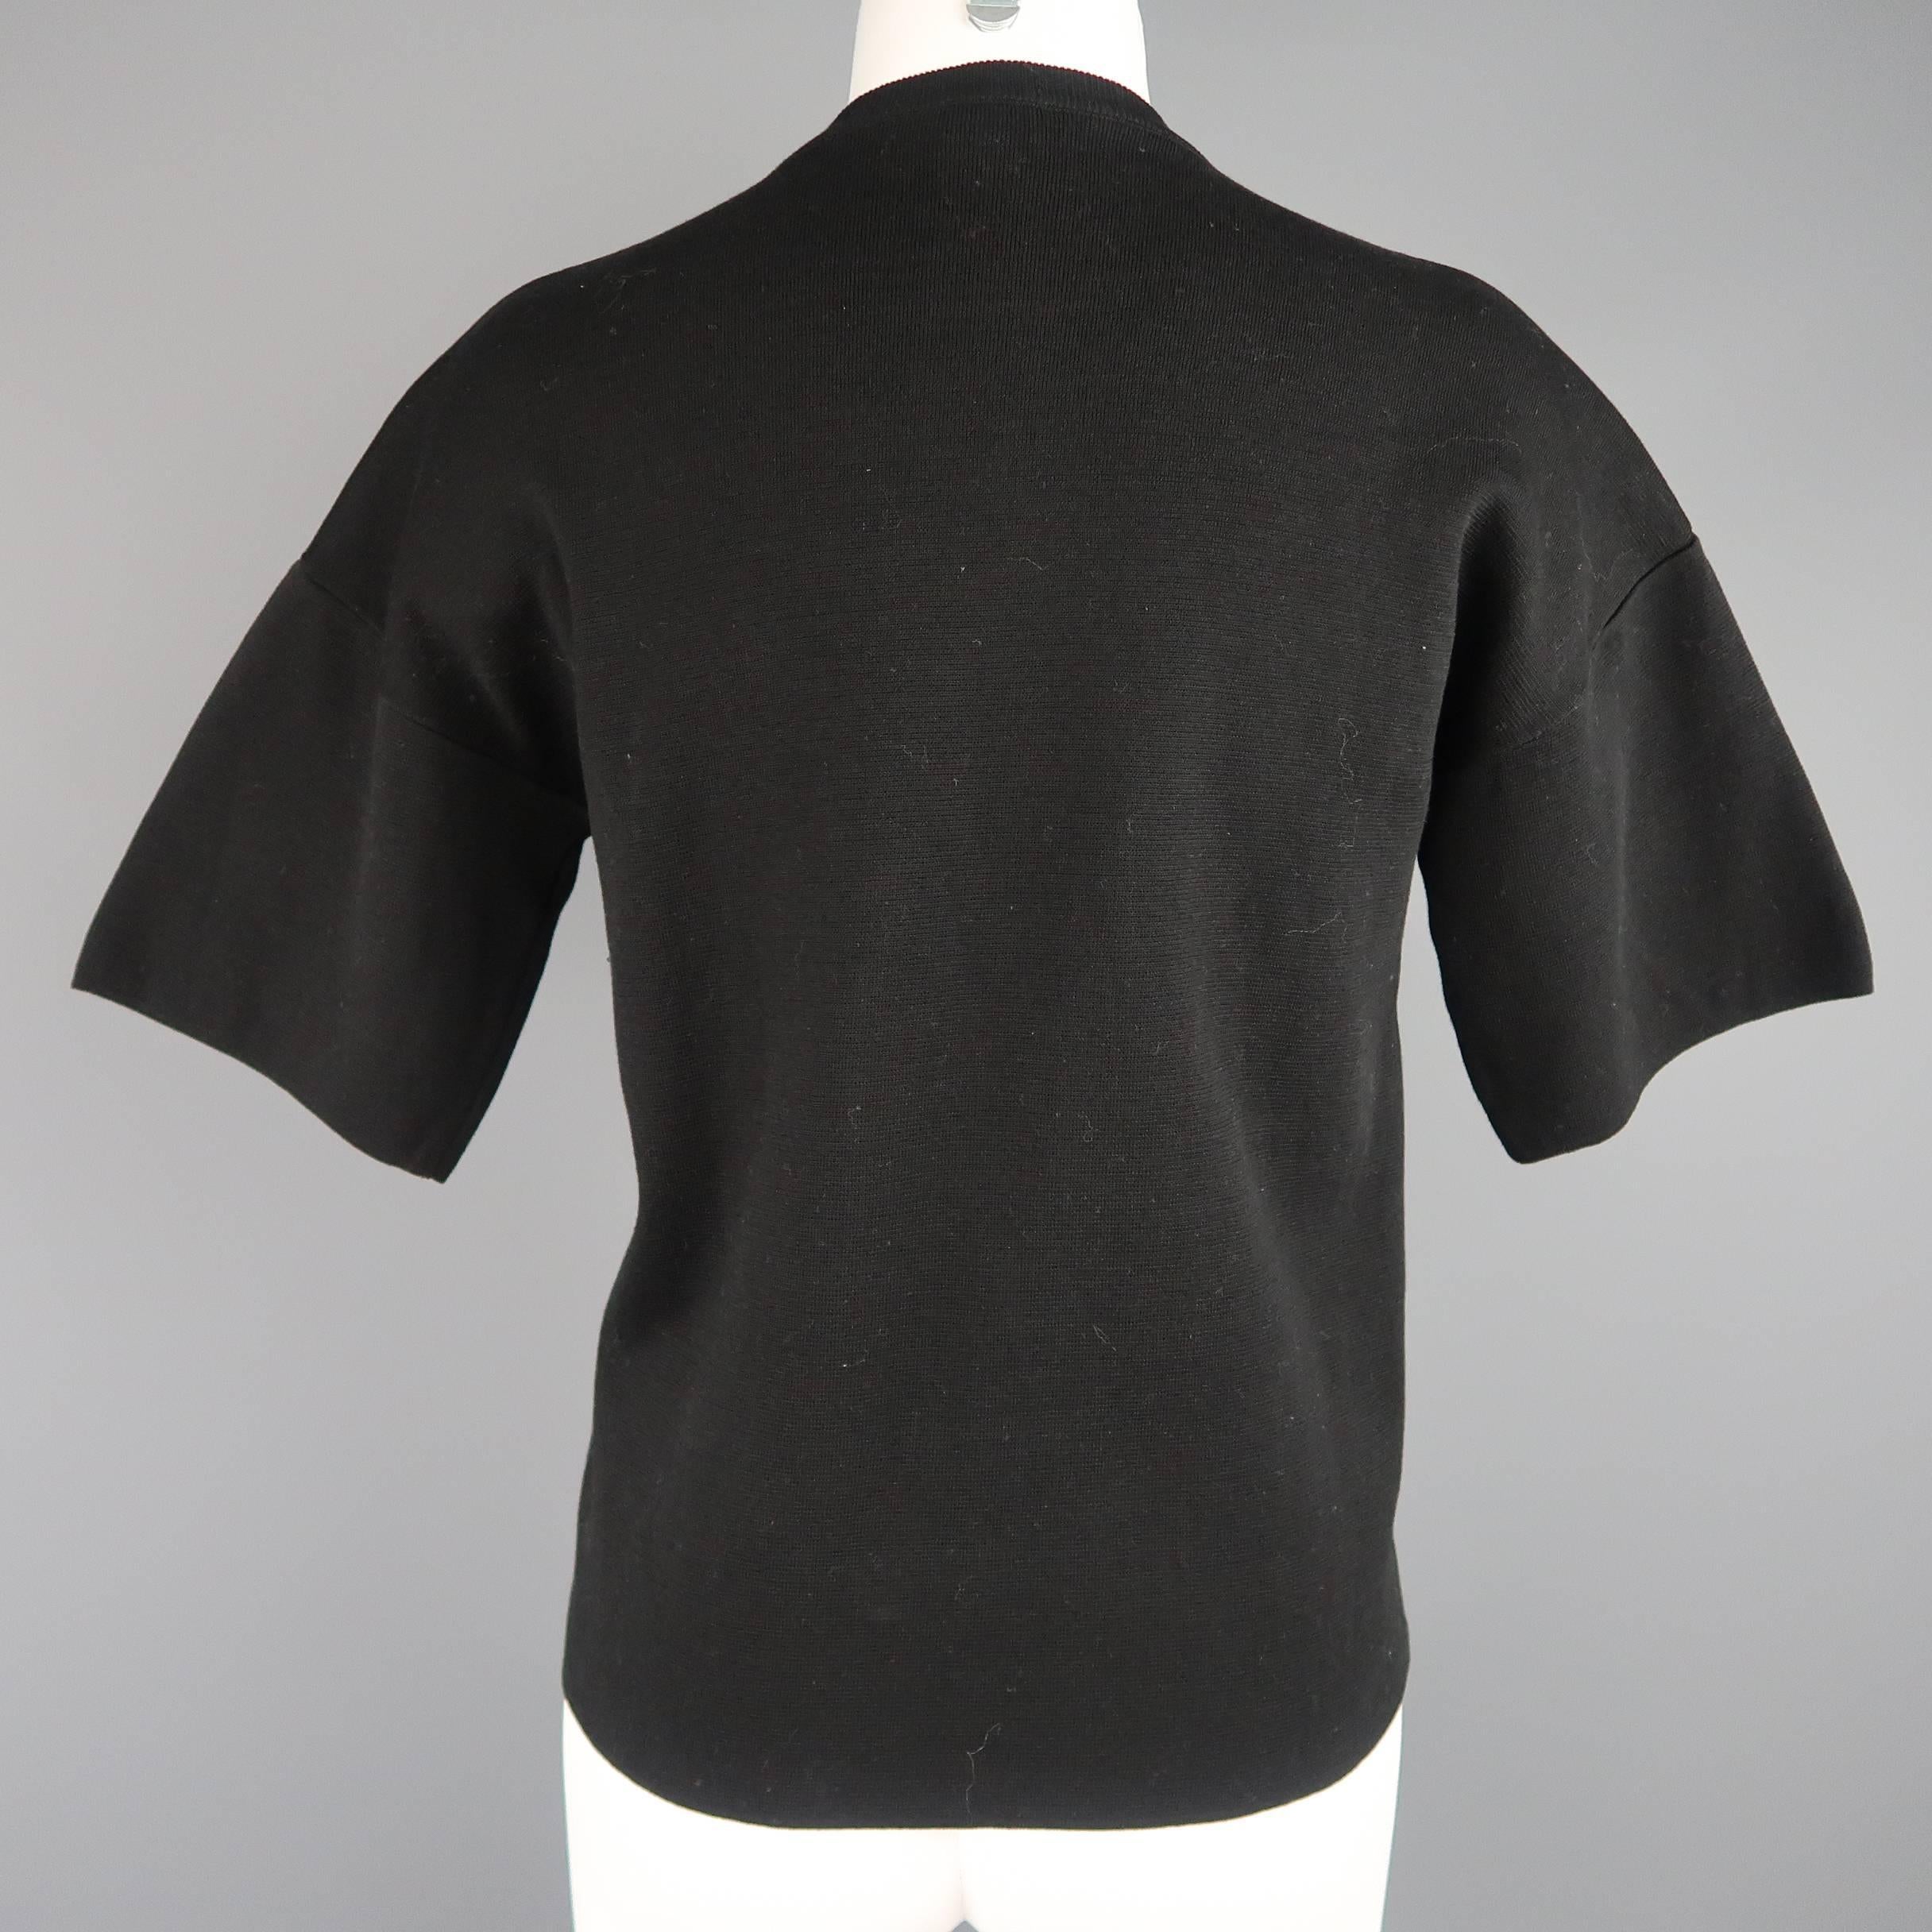 Women's or Men's JIL SANDER Size S Black Cotton Knit Crewnek Short Sleeve Pullover